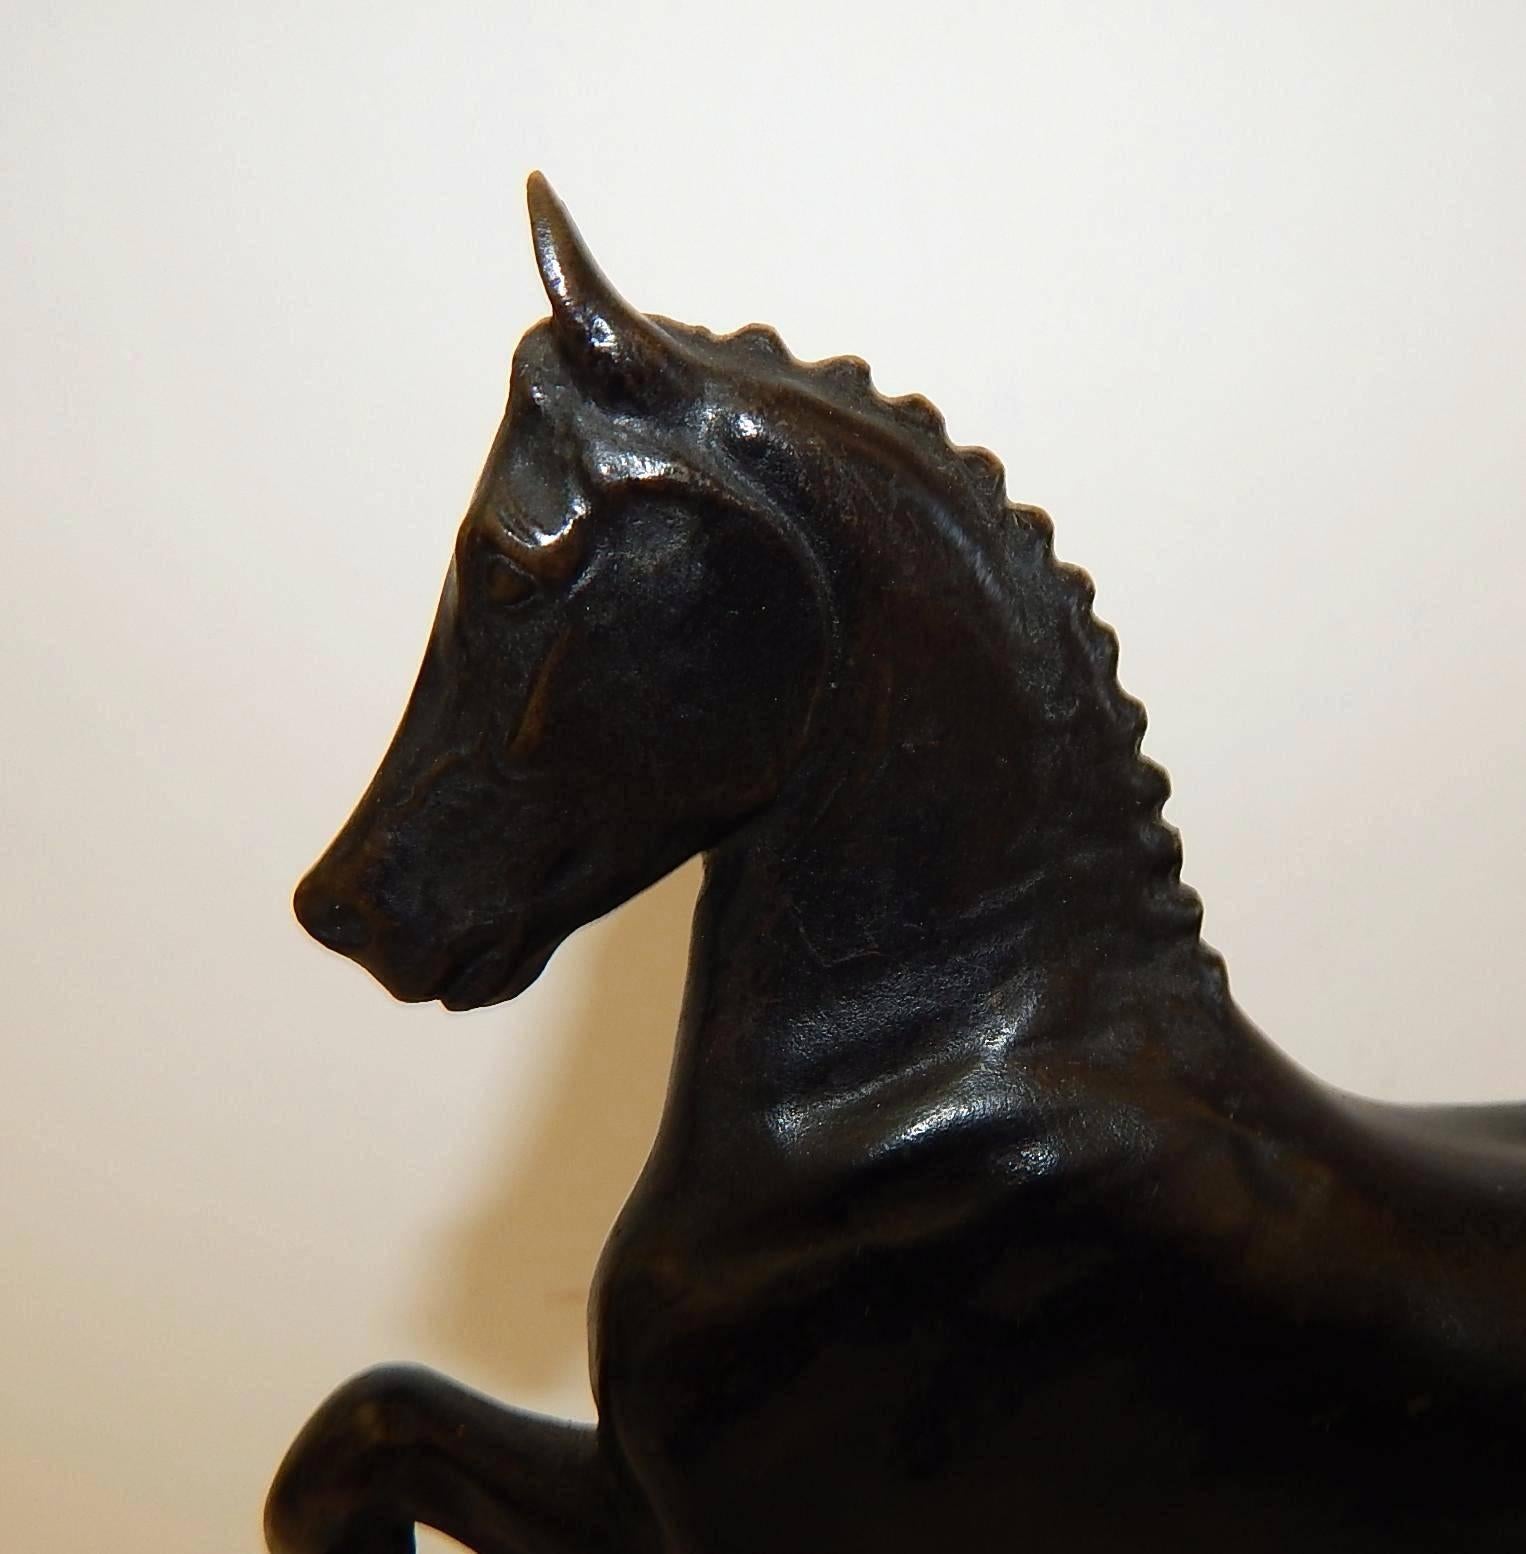 Herbert W. Clark Jr. (American, New York, 1877-1920).
Patinated bronze sculpture, Saddle Horse, 1915. 
Base marked 